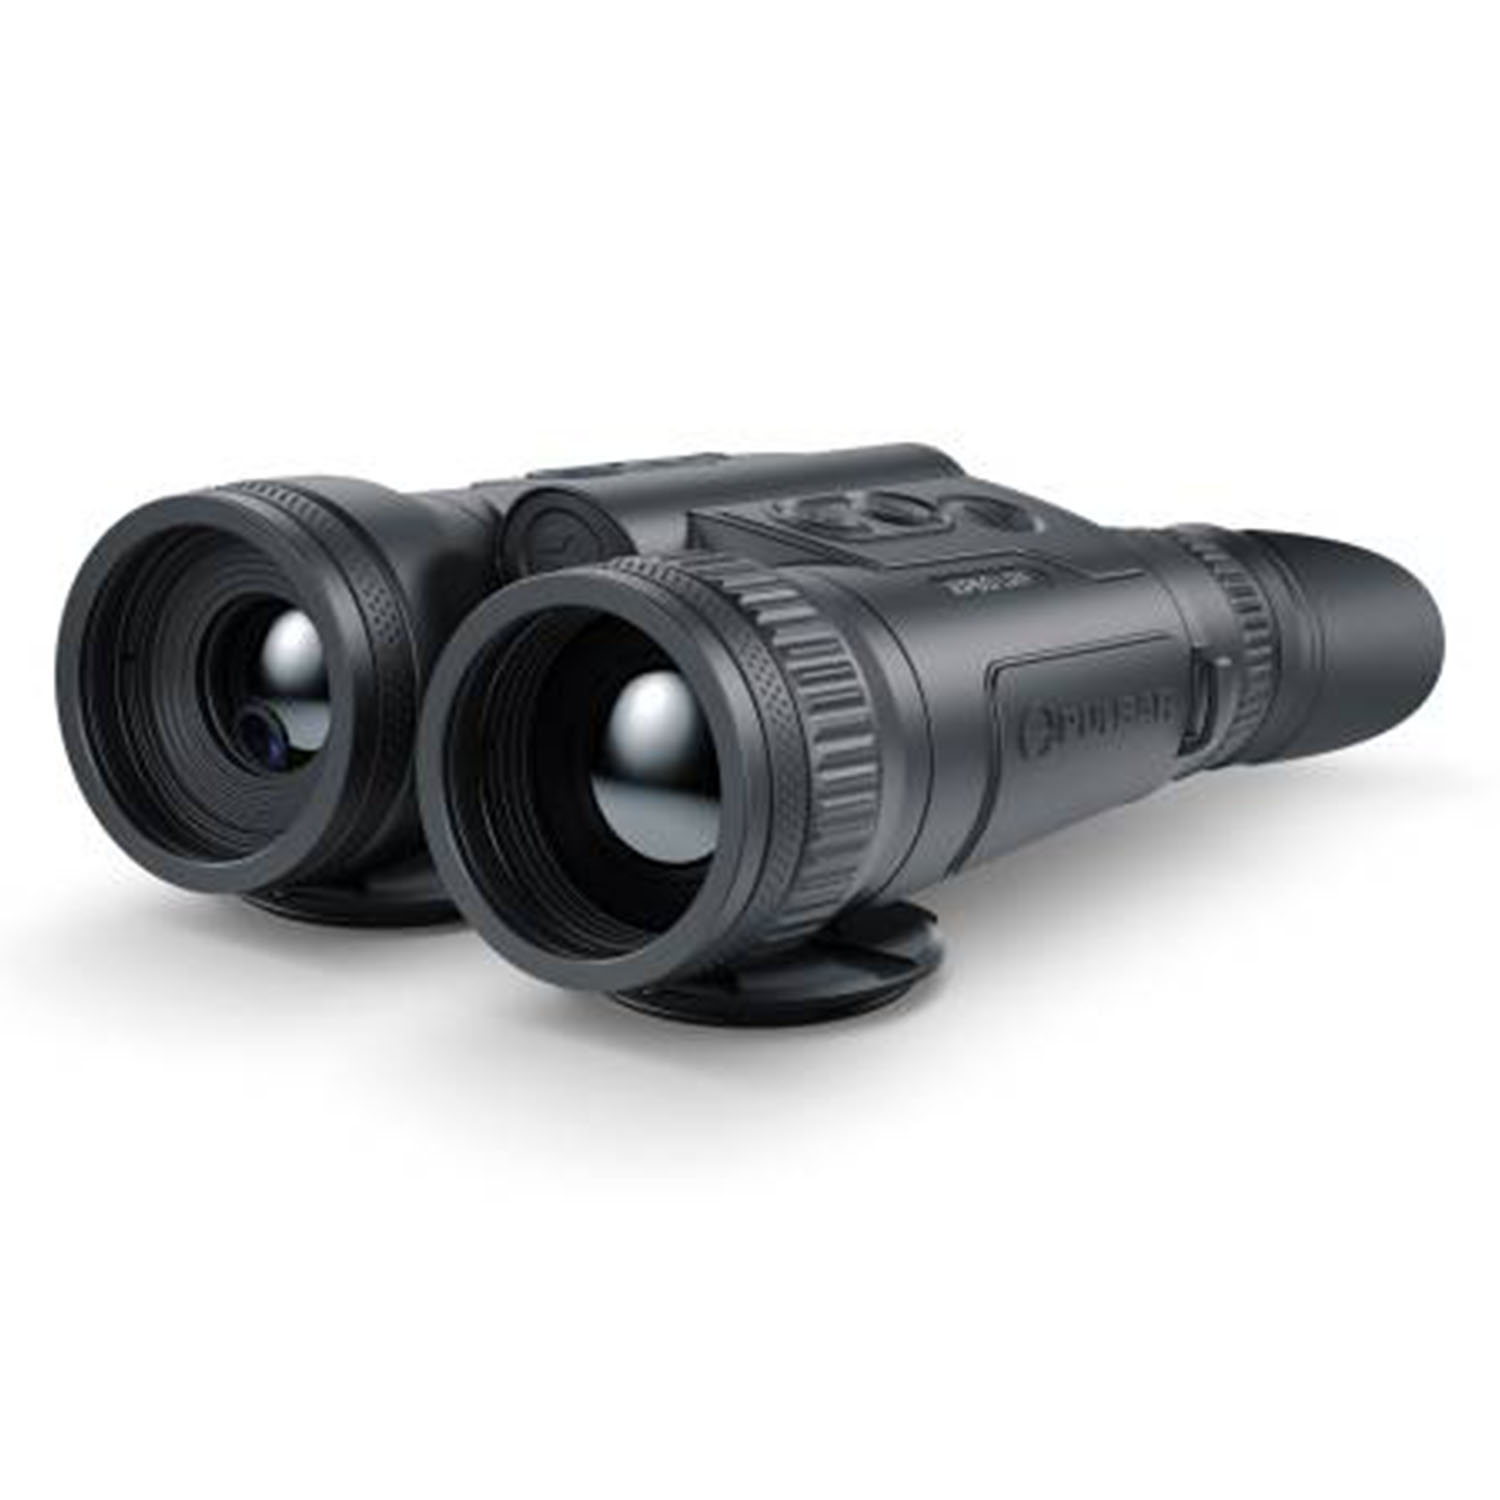 Thermal Imaging Binoculars Merger LRF XP50 - Hunting Equipment